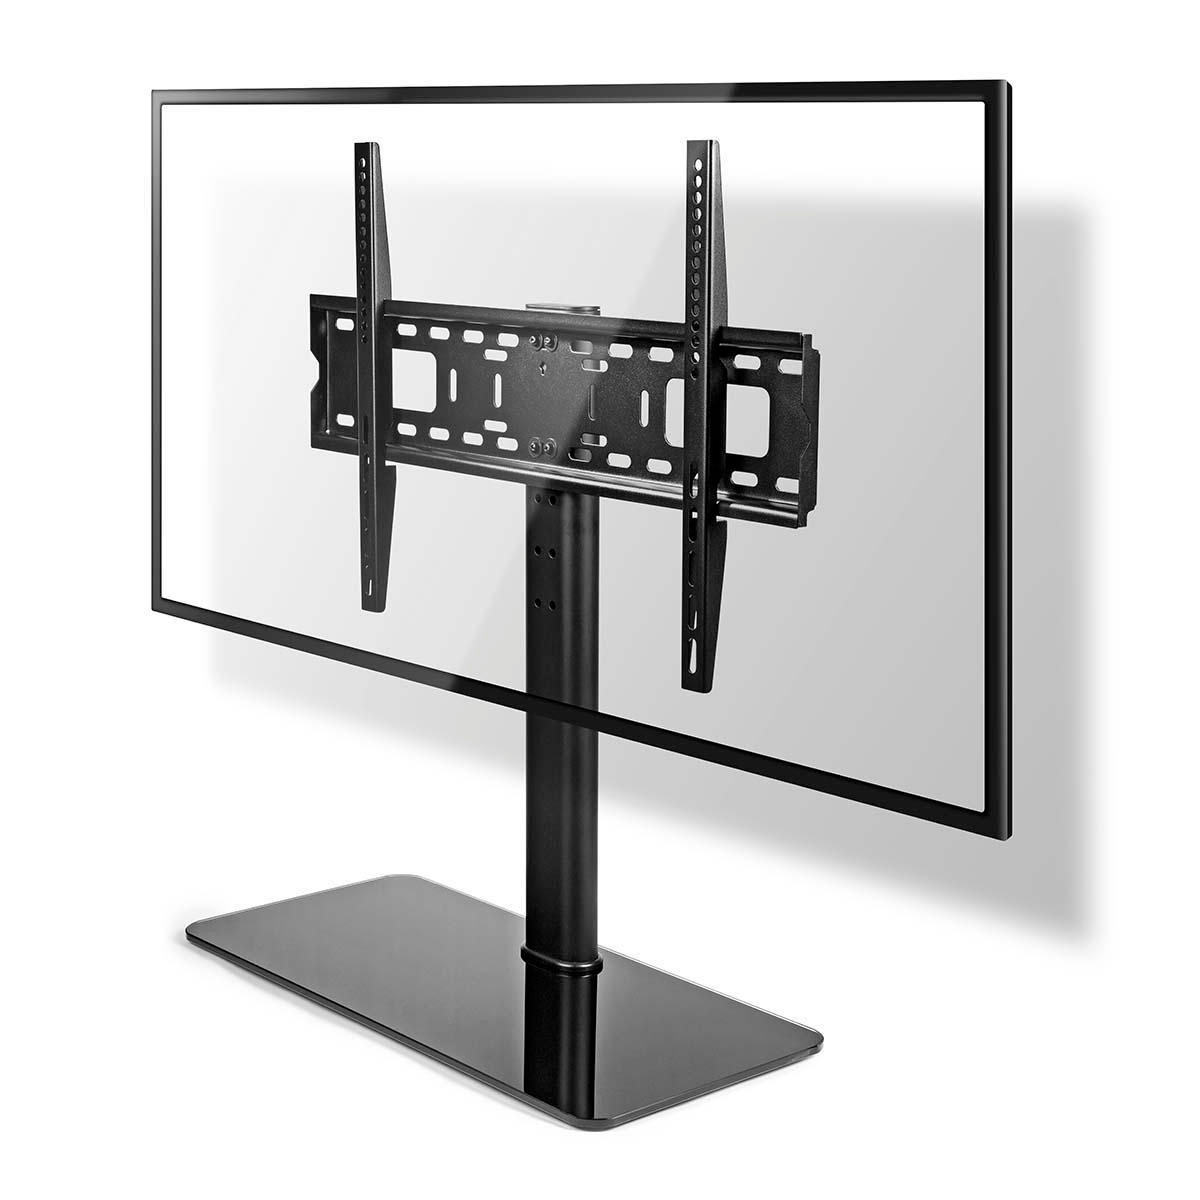 Nedis TVSM2030BK stojan s TV držákem 32 - 65", 45 kg, 4 výškové polohy, černý